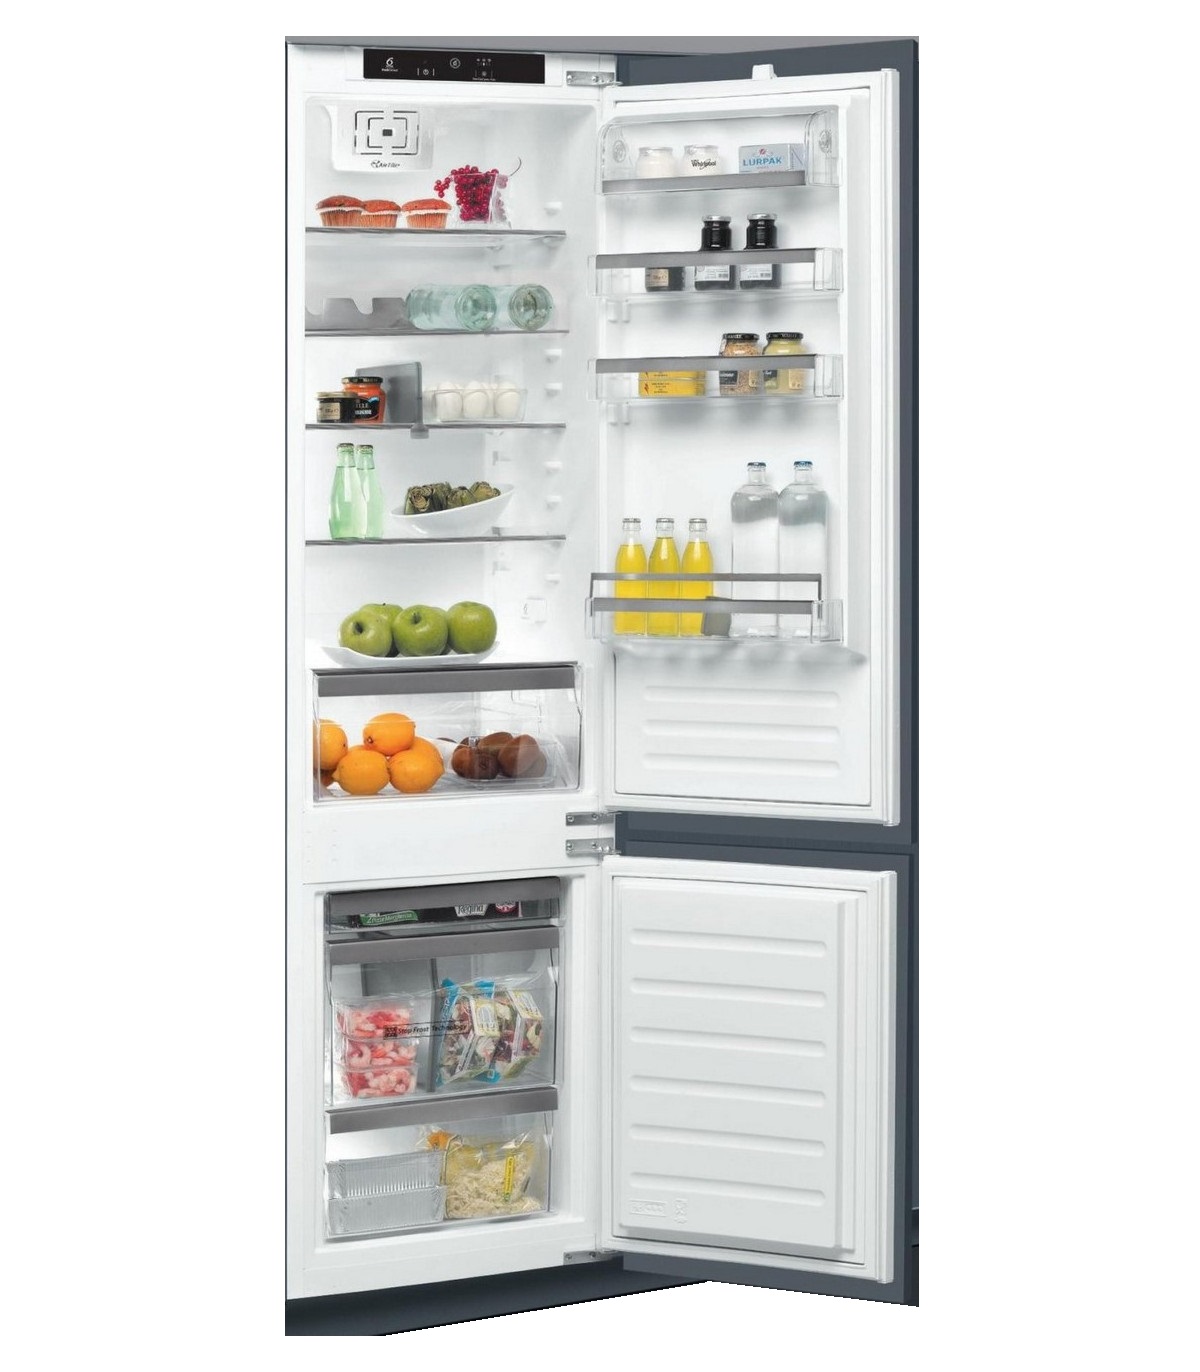 Встраиваемый холодильник Whirlpool ART 9811 SF2 серебристый встраиваемый холодильник whirlpool art 9811 sf2 белый